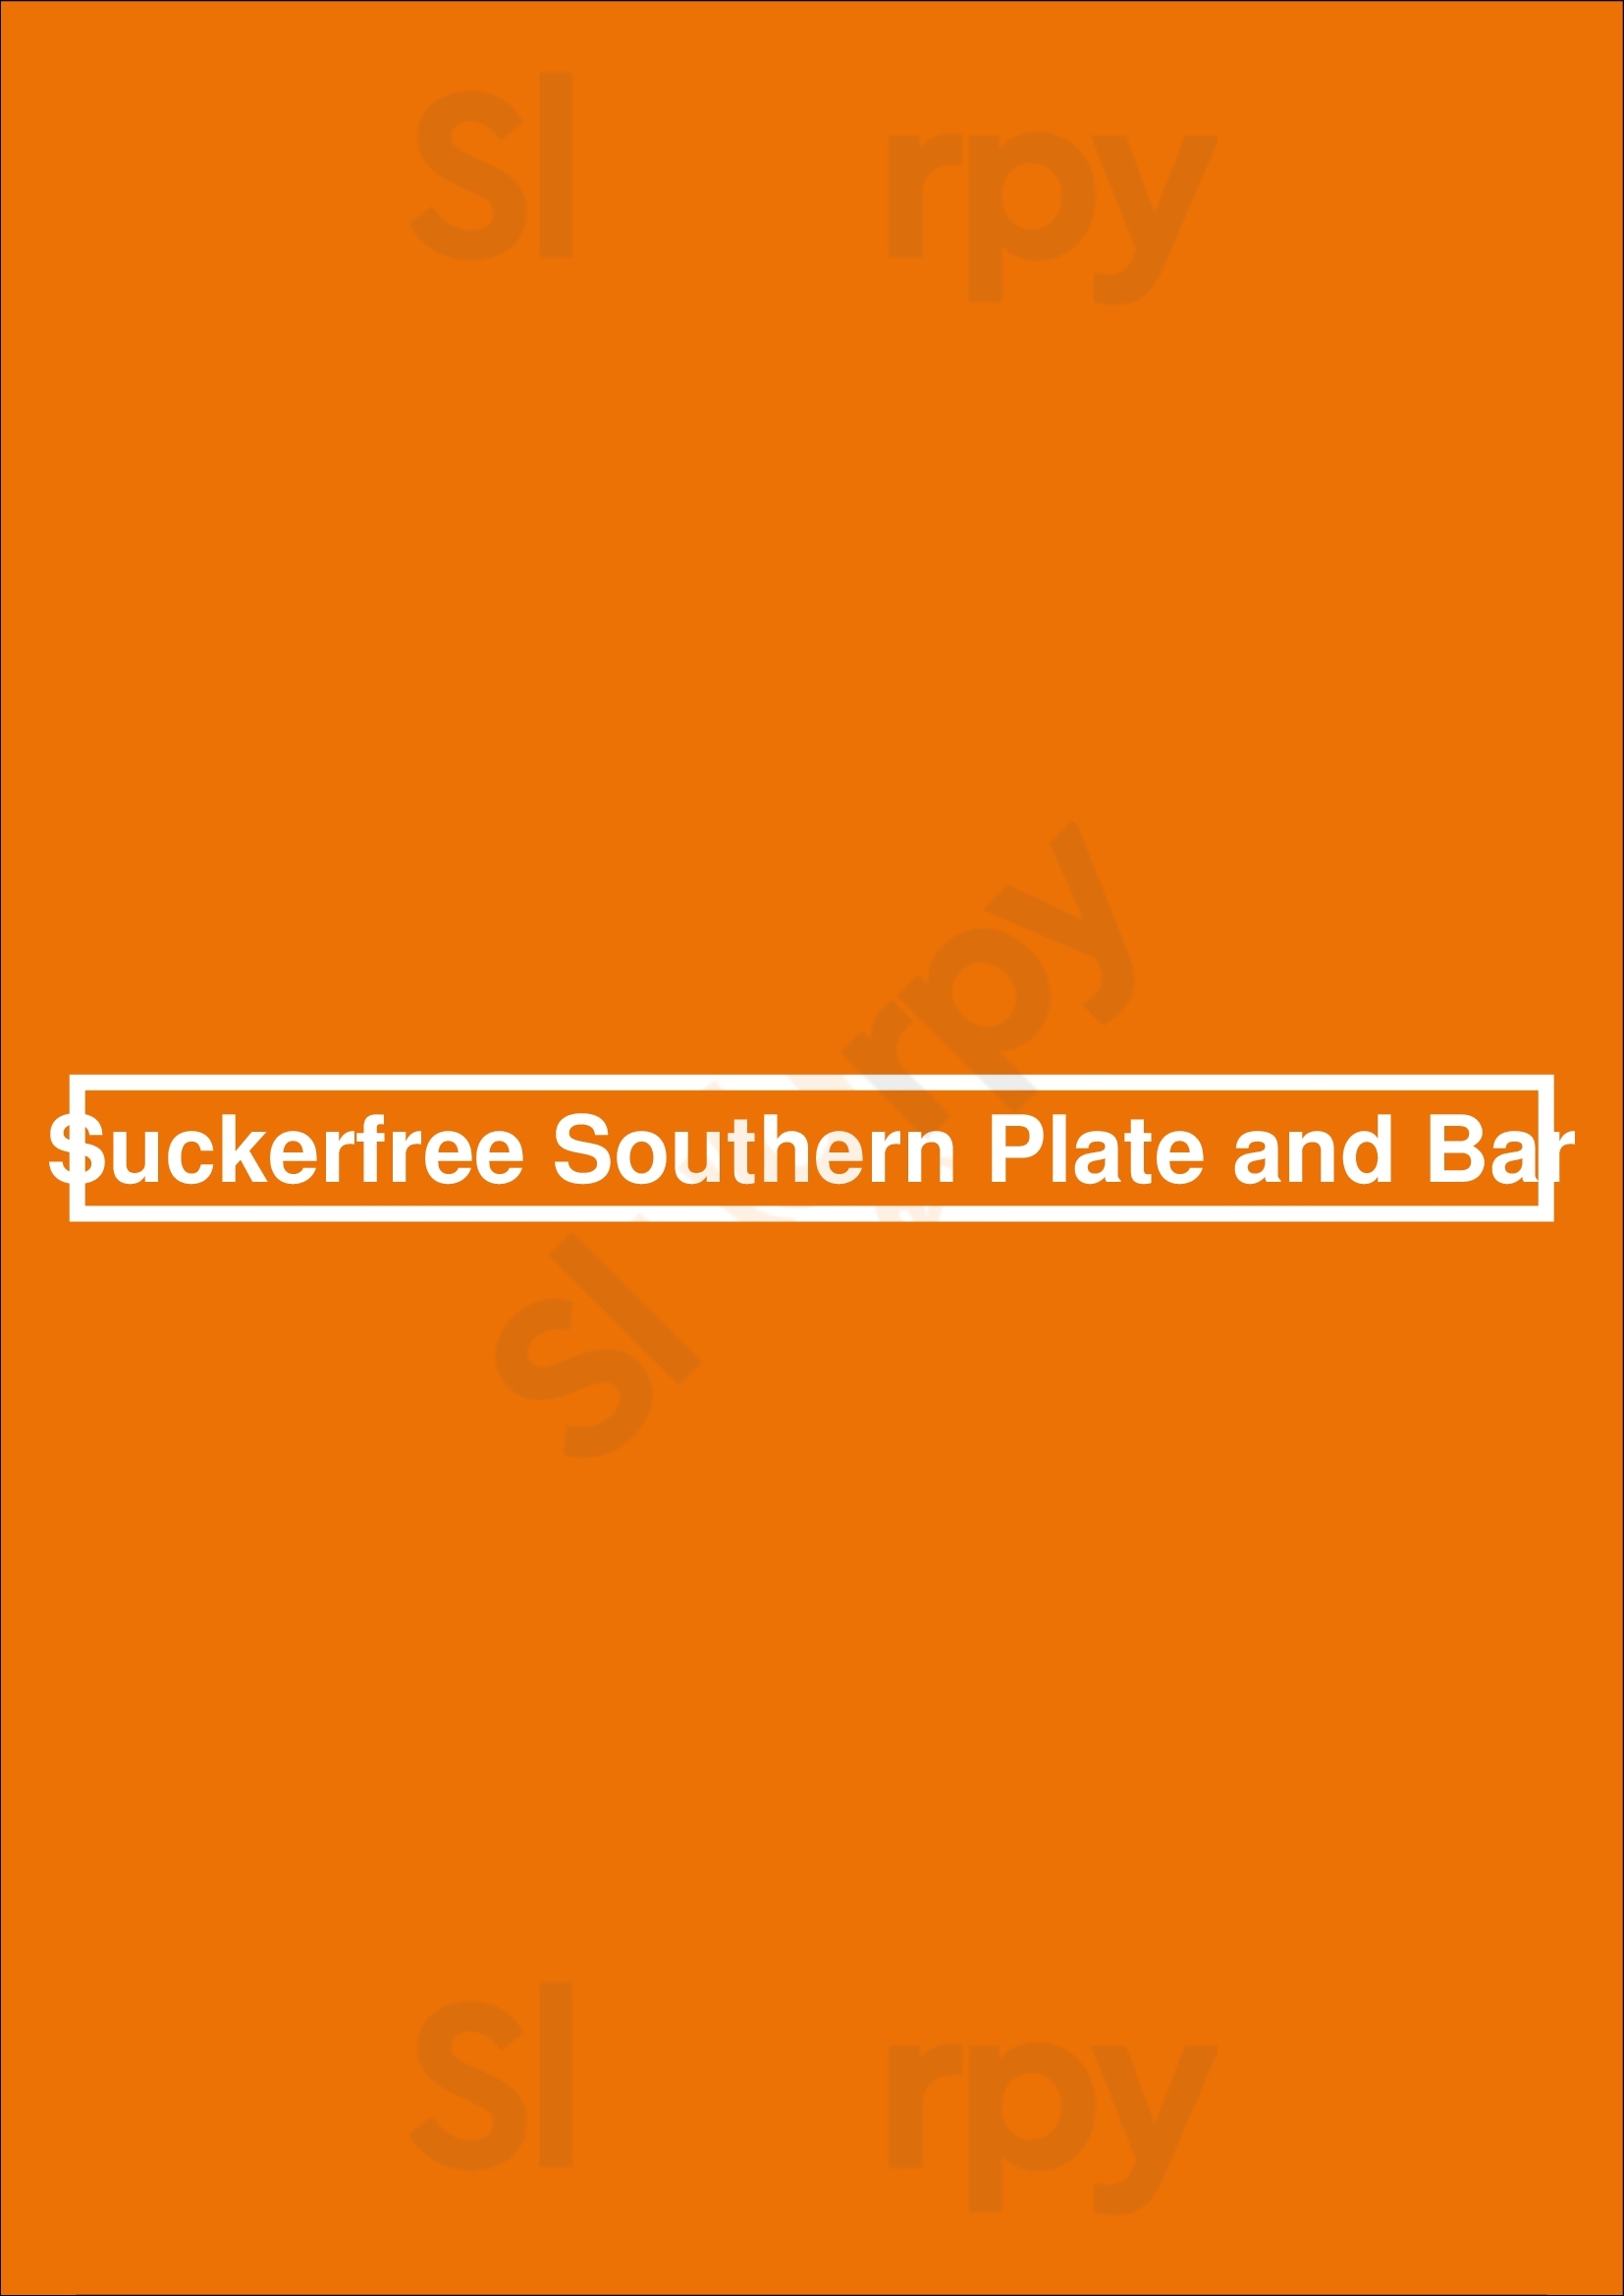 Suckerfree Southern Plate And Bar San Diego Menu - 1